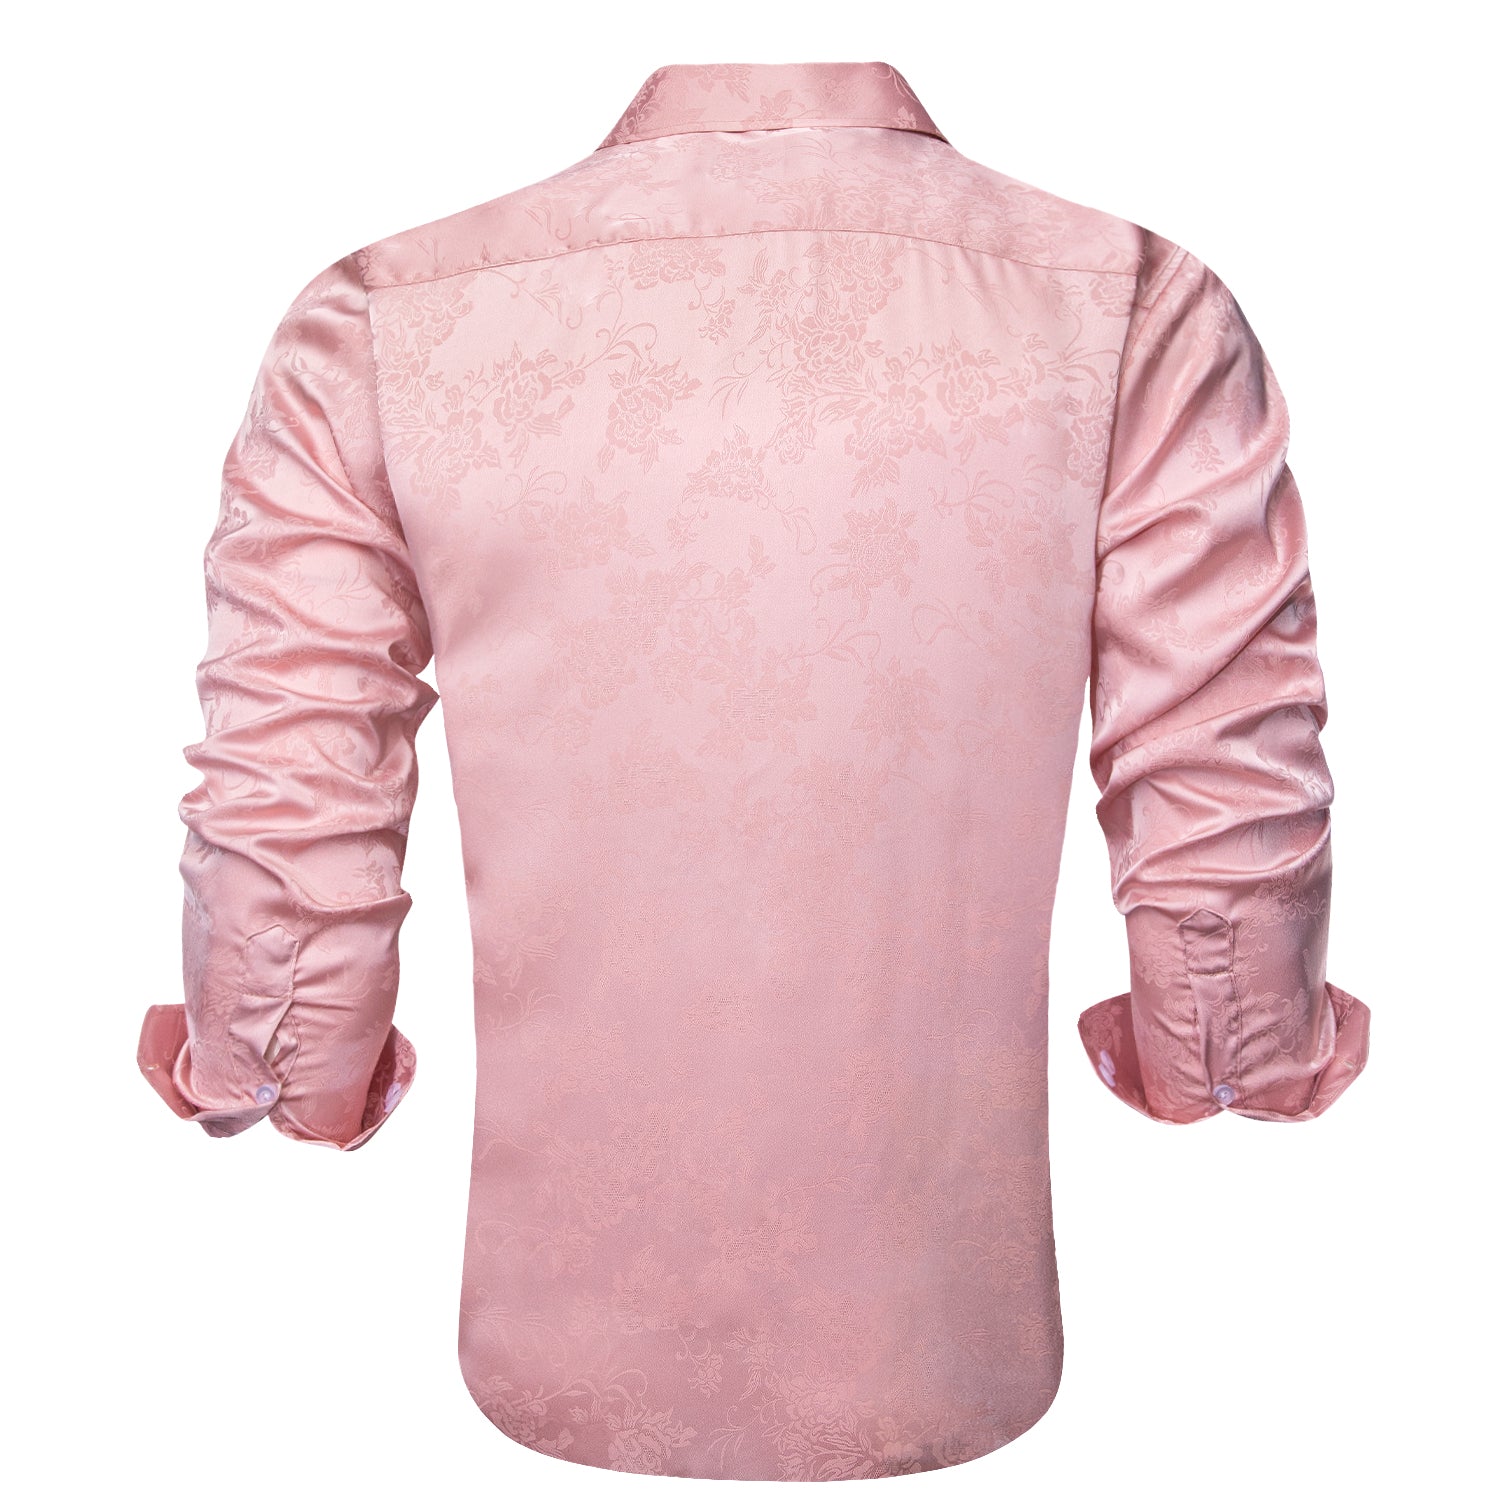 Pink Paisley Silk Men's Long Sleeve Shirt